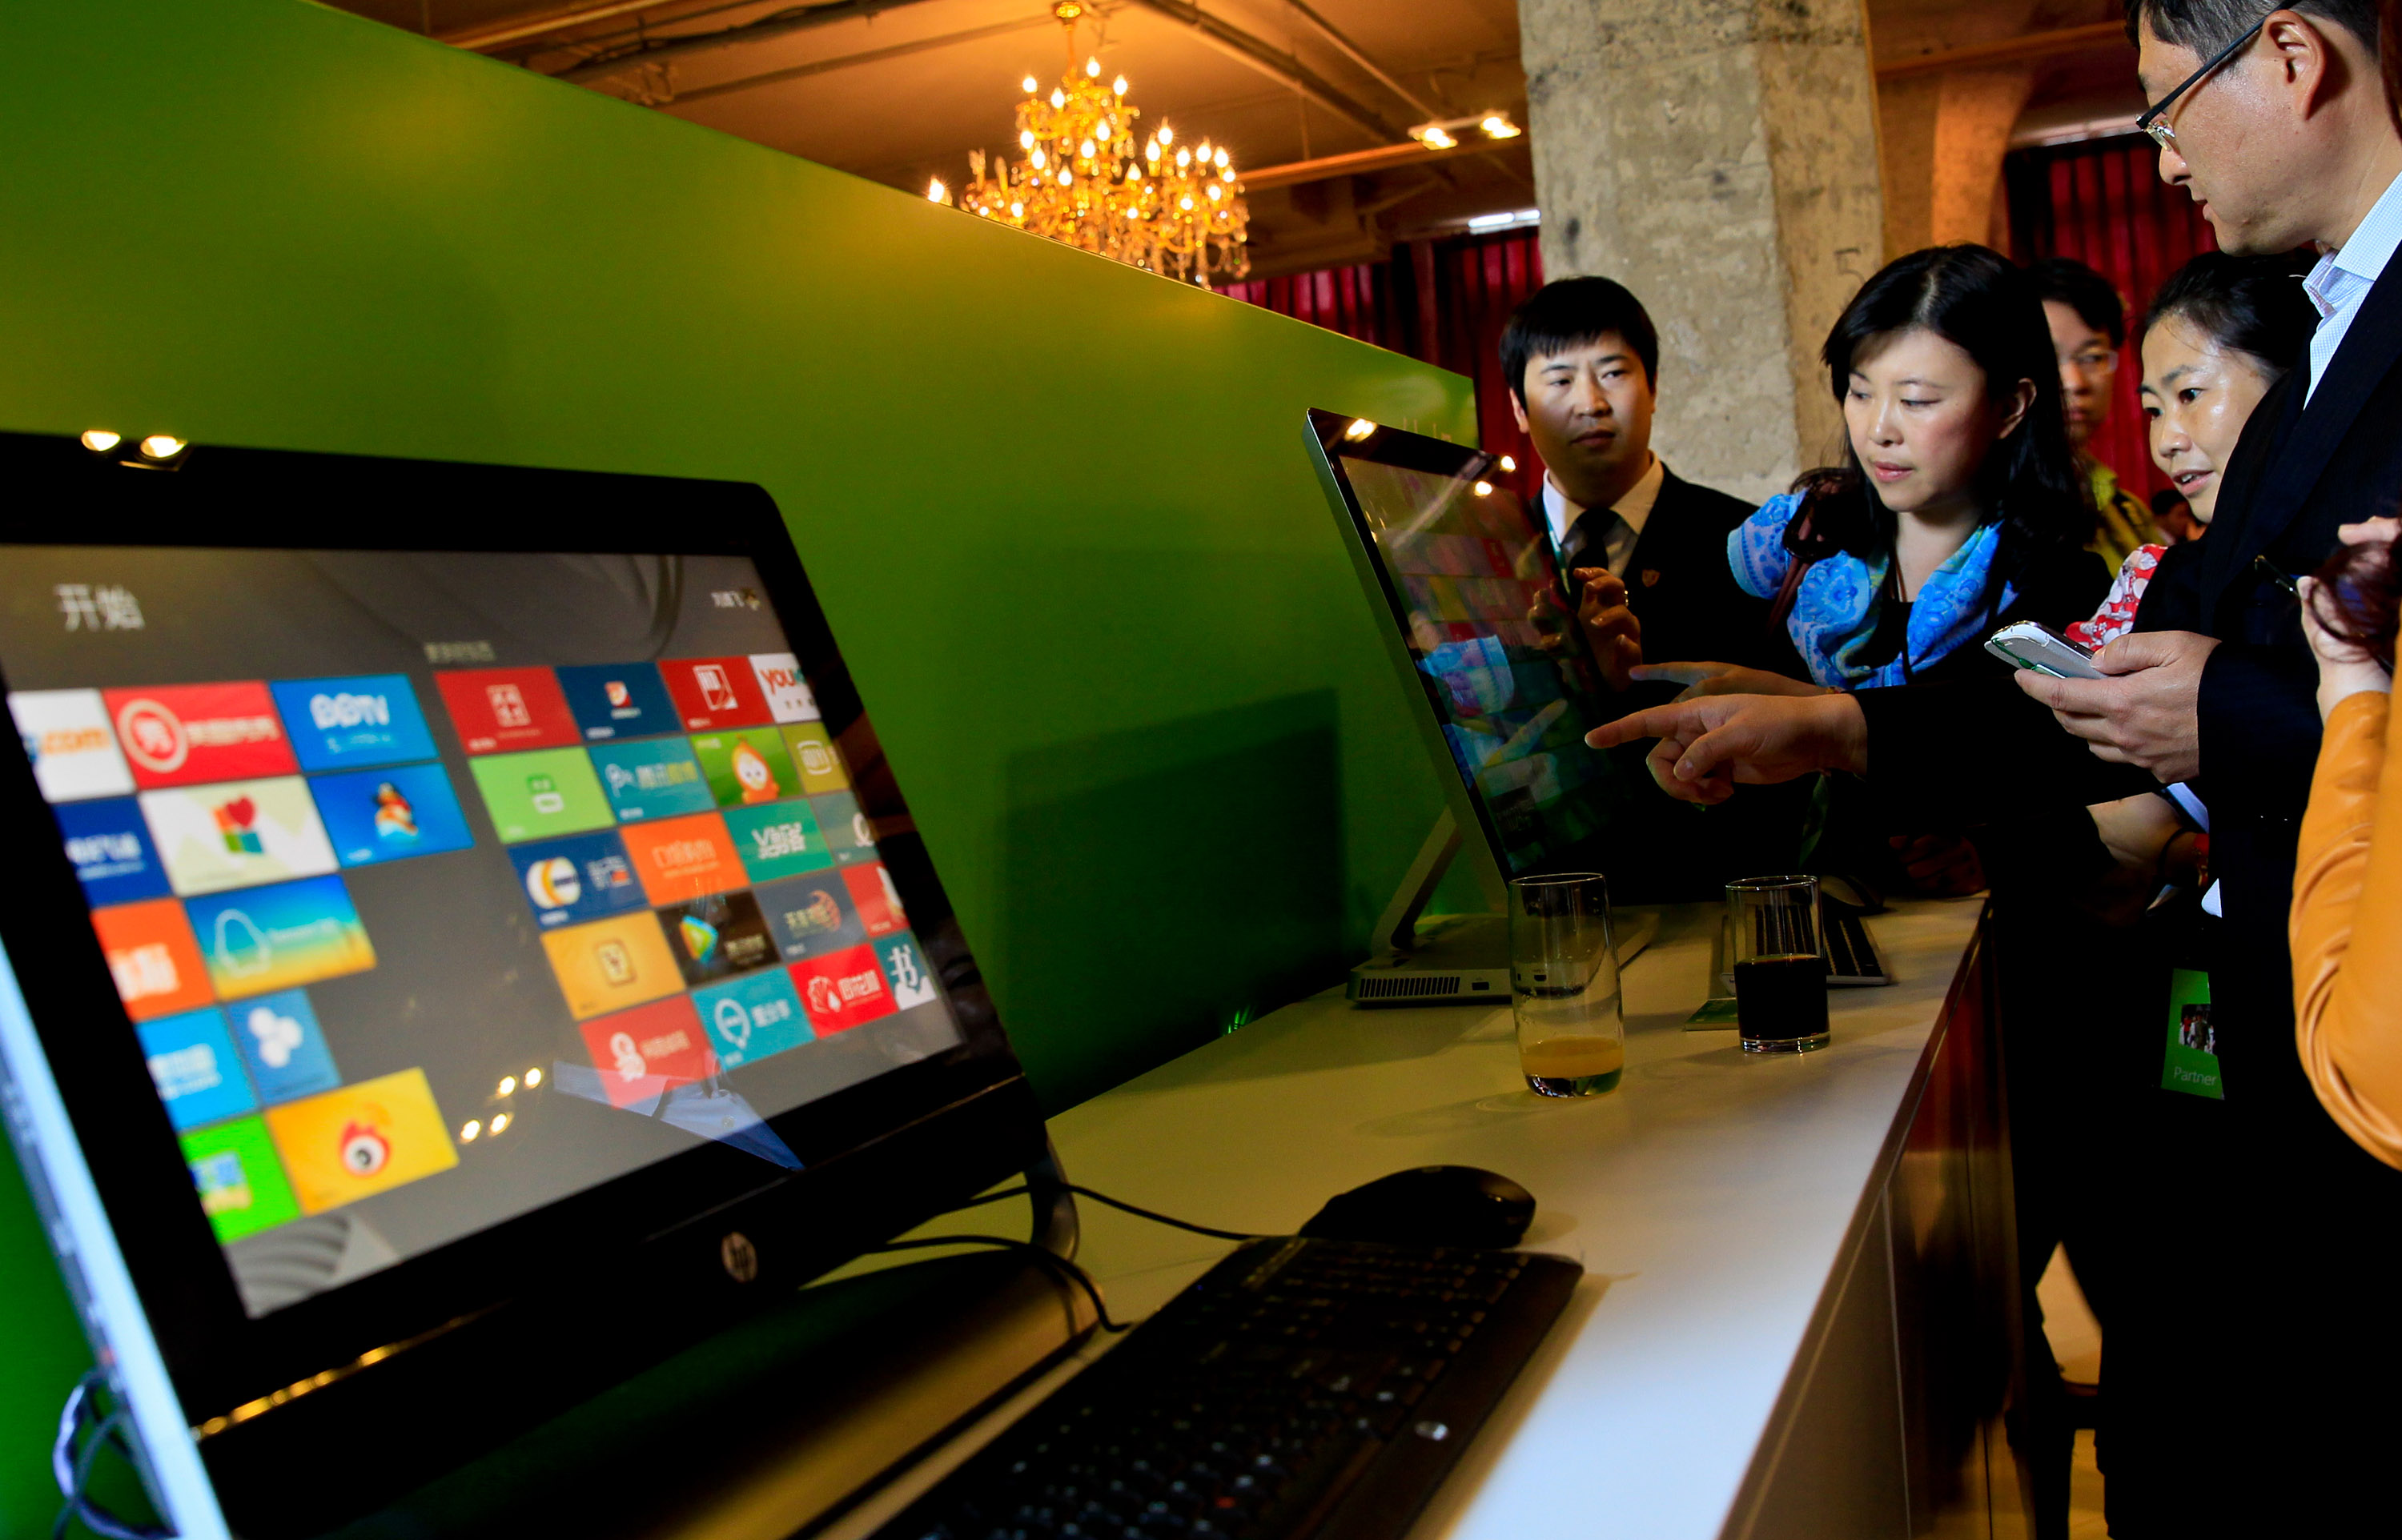 Microsoft celebrates upcoming Windows 8 in China